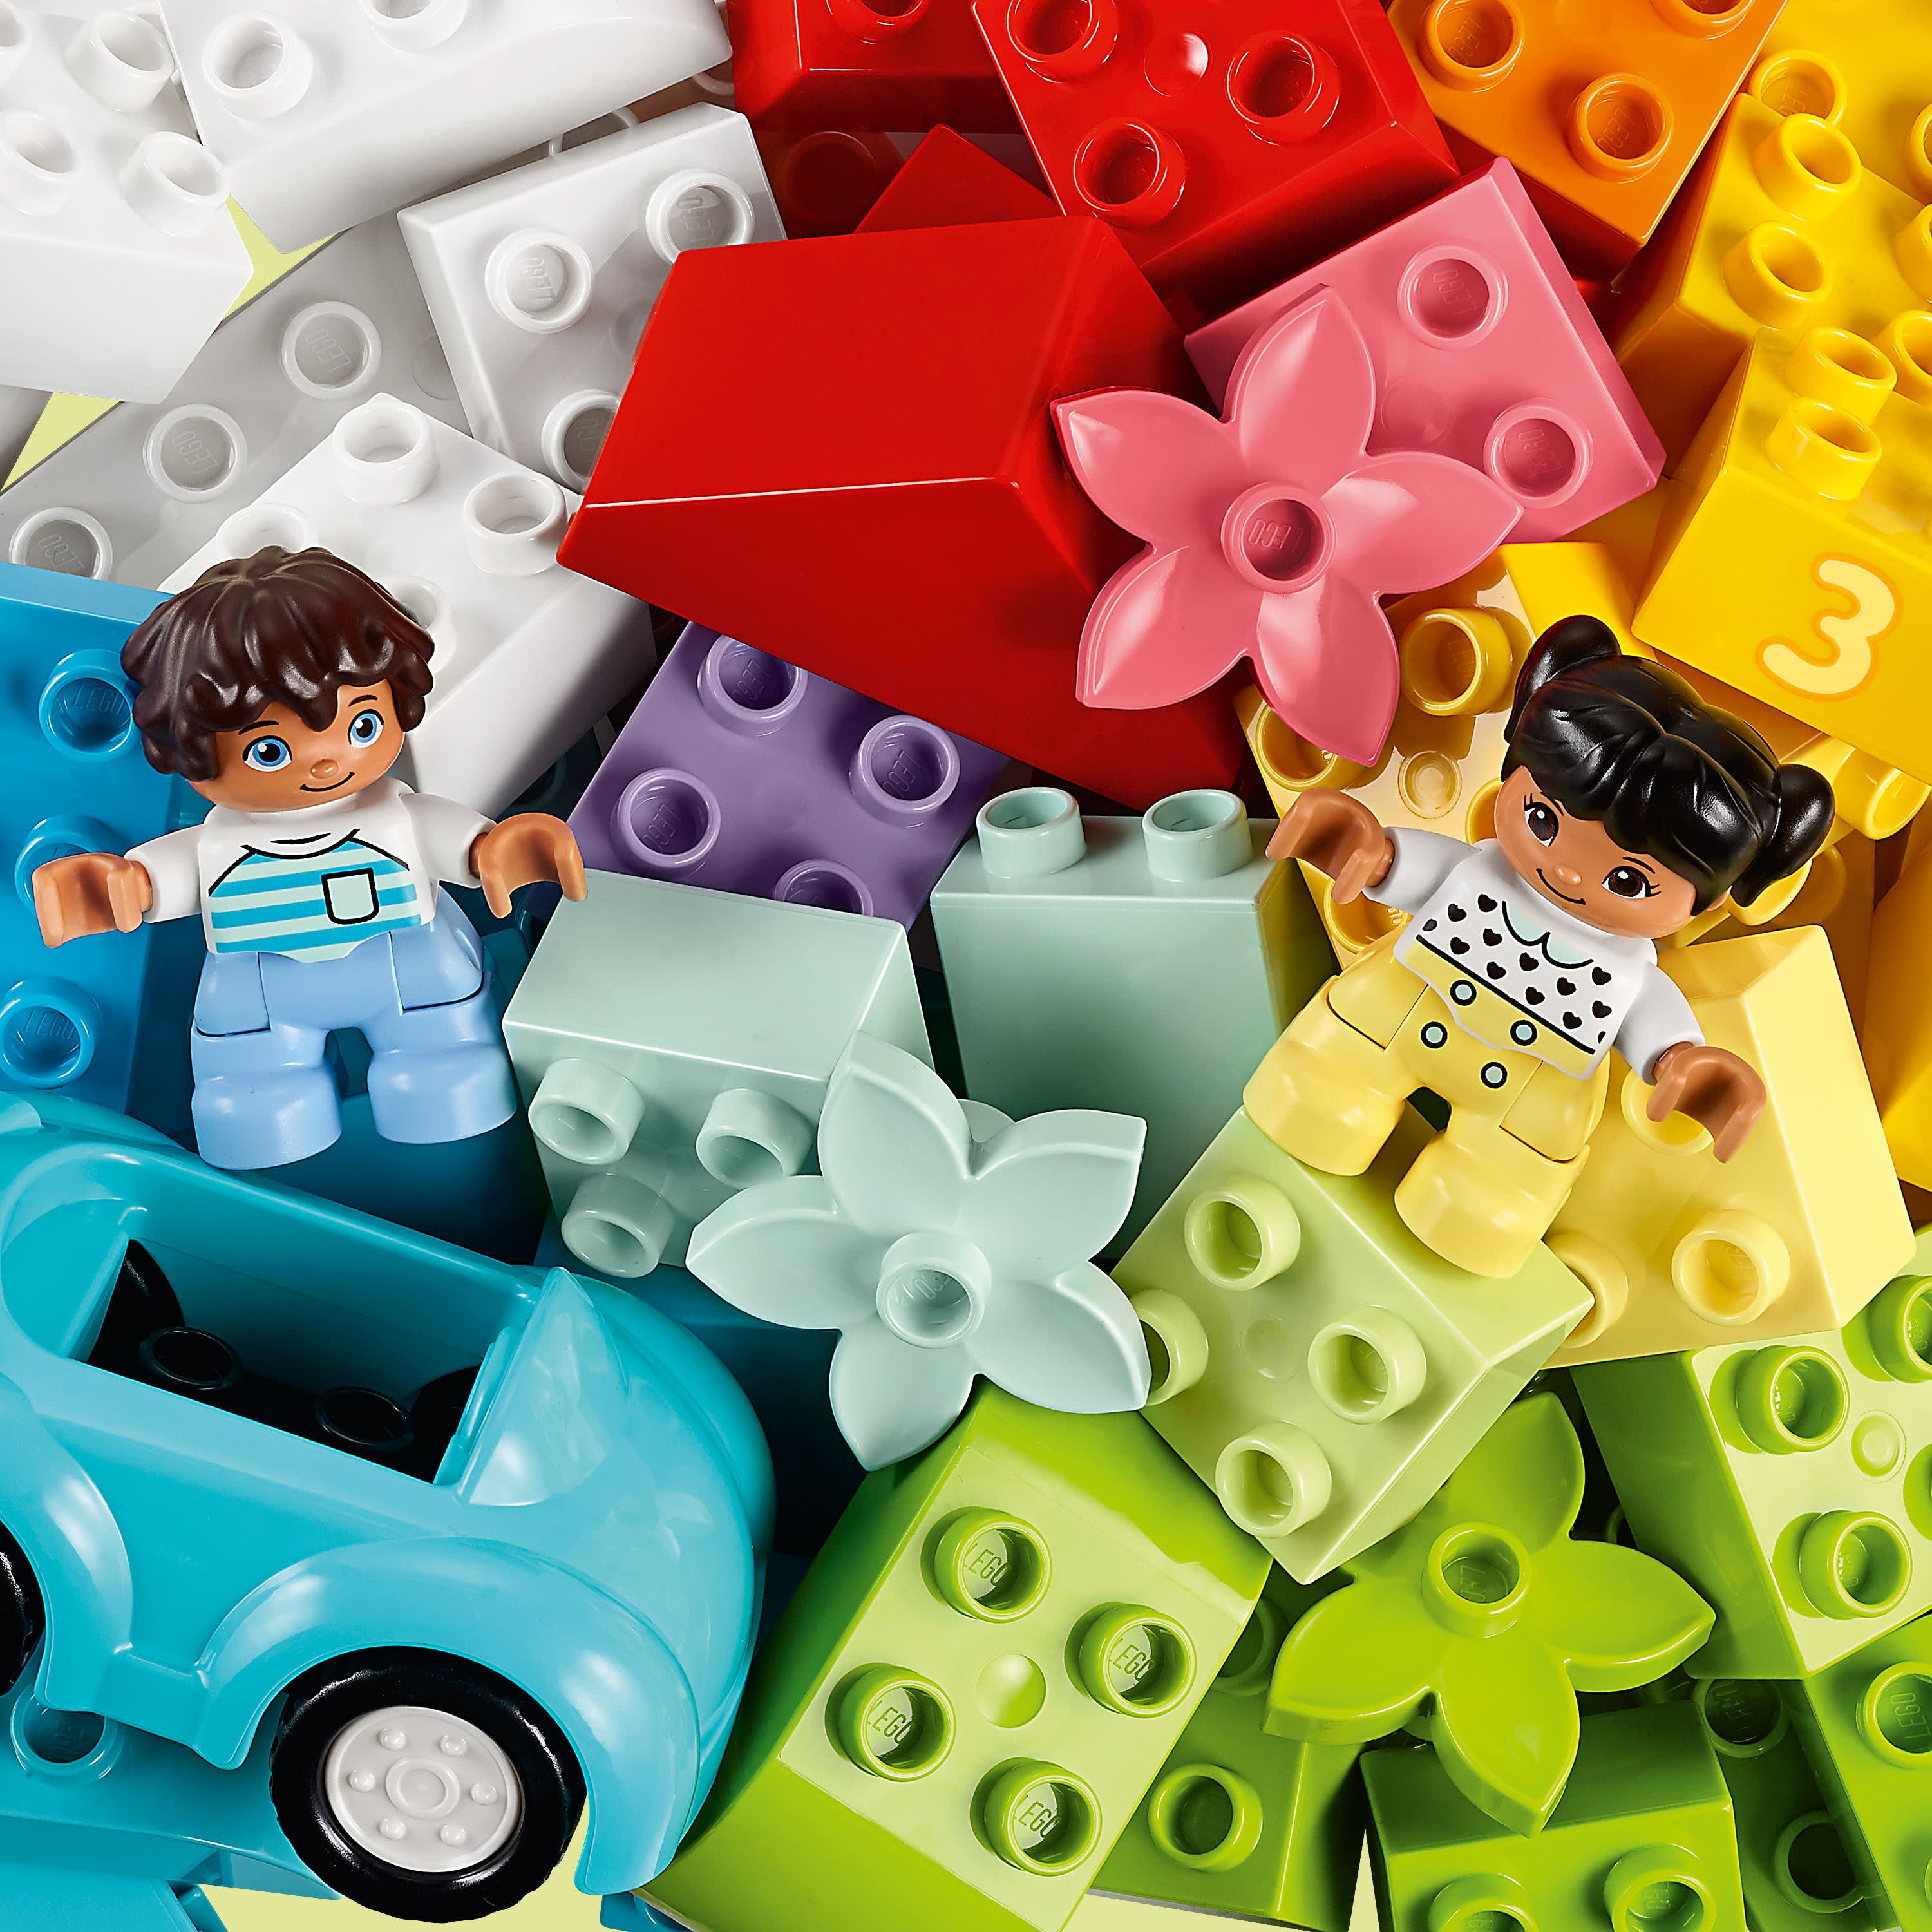 LEGO DUPLO - 10913 Brick Box - Playpolis